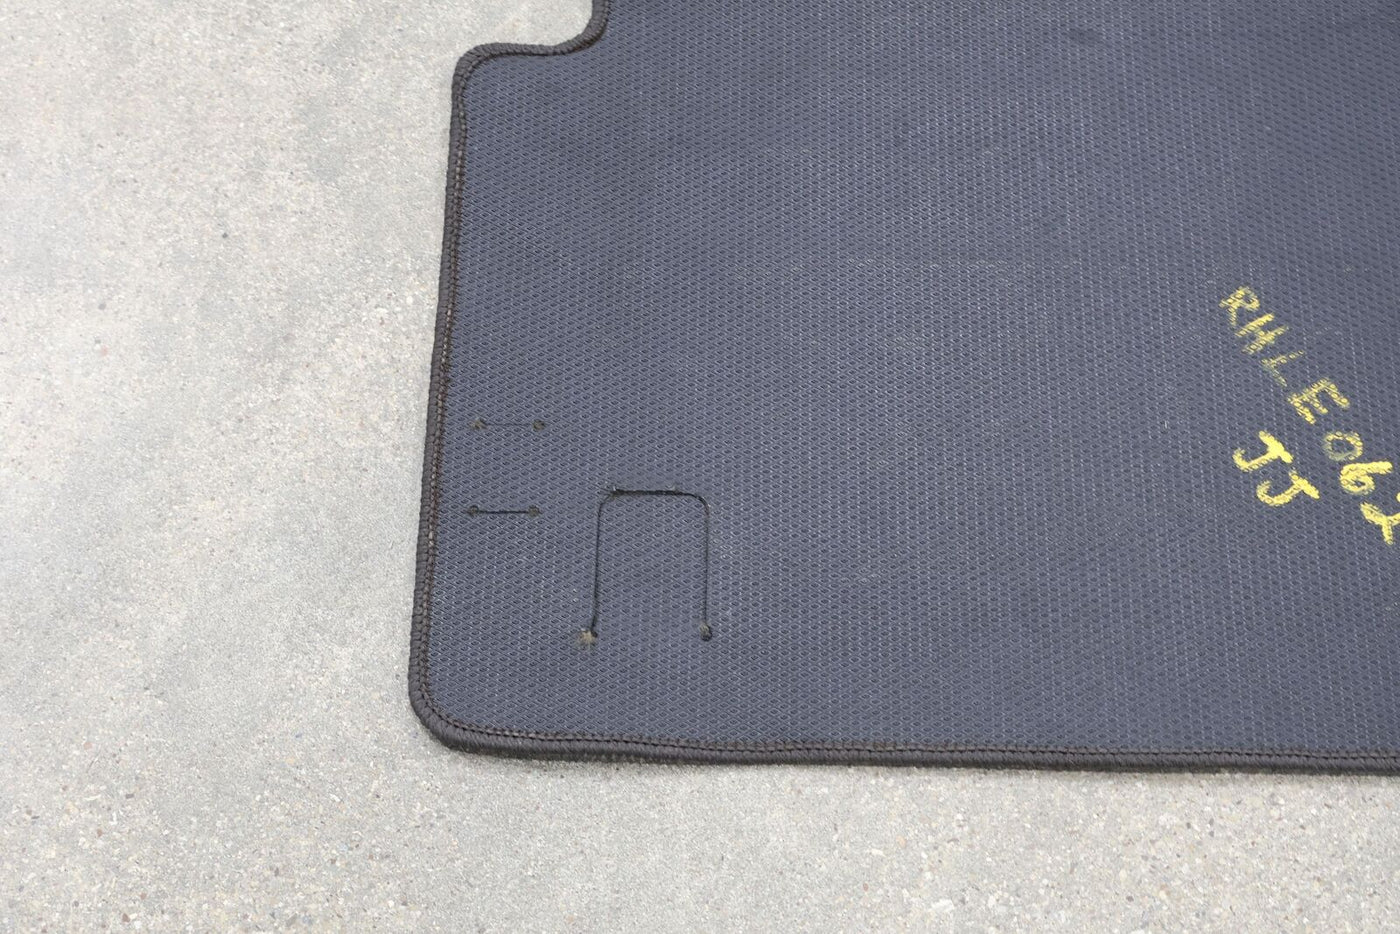 2017 Lexus GX460 OEM Rear Cloth Cargo Floor Mat (Brown) Signs Of Use